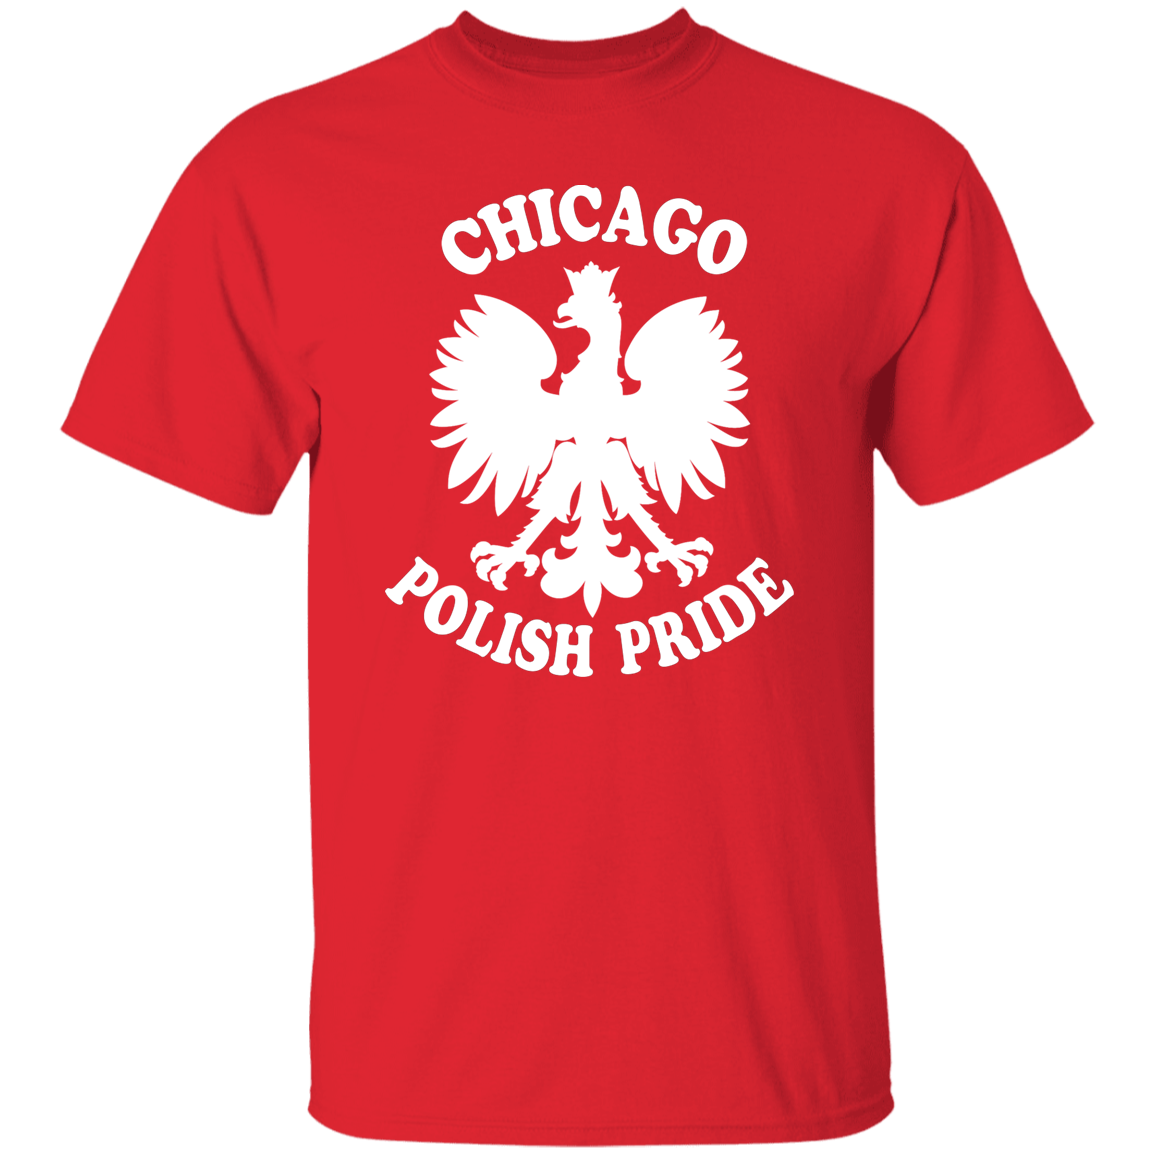 Chicago Polish Pride Apparel CustomCat G500 5.3 oz. T-Shirt Red S